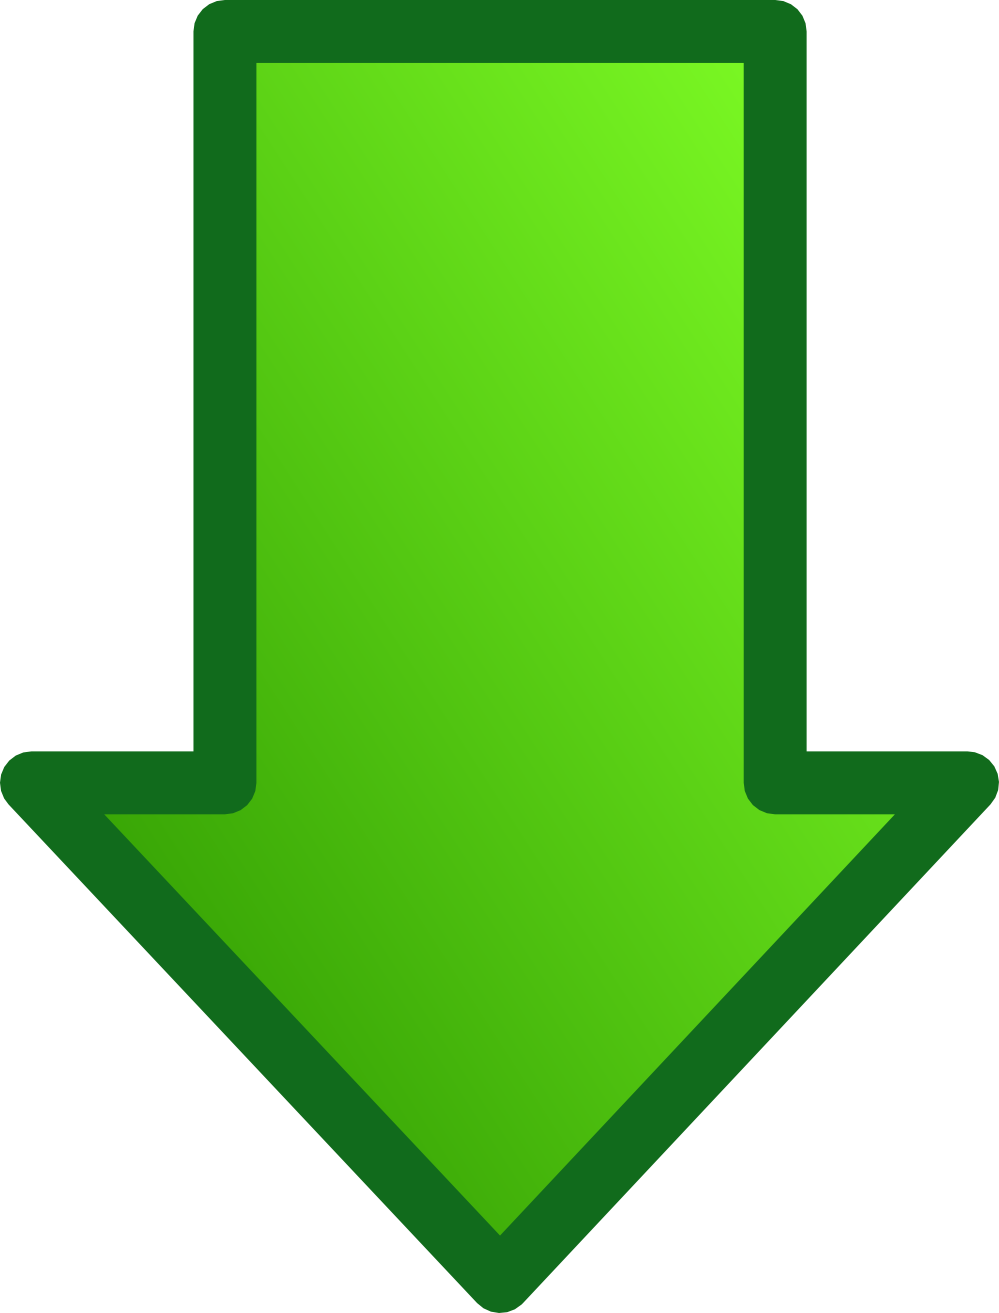 Green Arrow Clipart - Clipart library